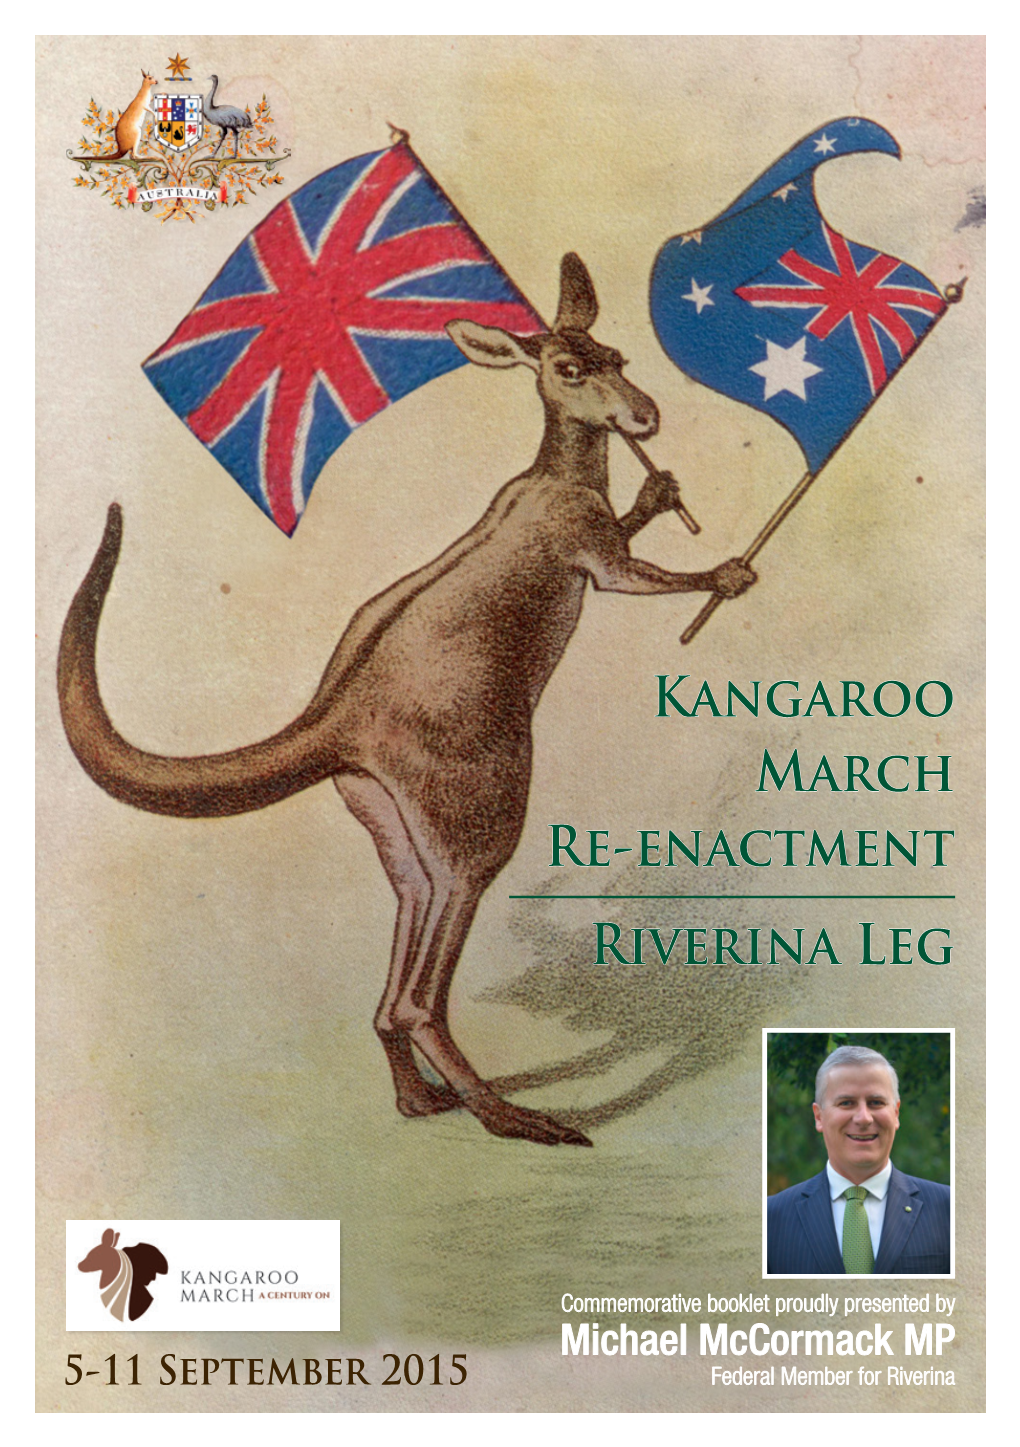 Kangaroo March Re-Enactment Riverina Leg